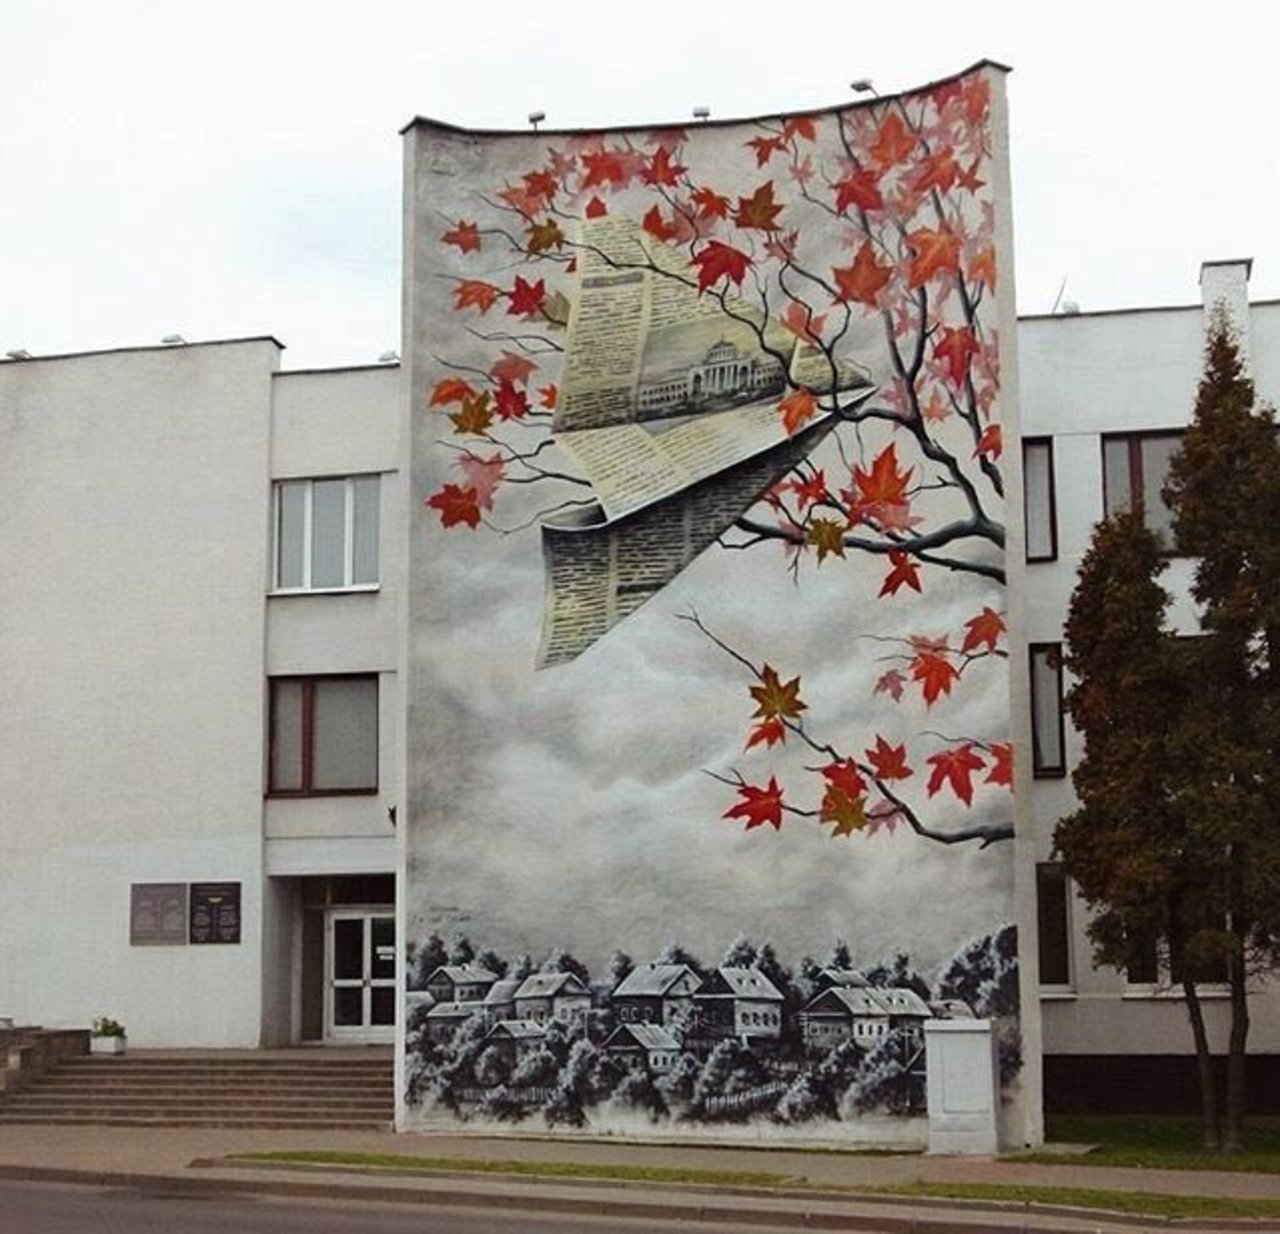 RT @GoogleStreetArt 

New Street Art by MUTUS in Belarus 

#art #graffiti #mural #streetart https://t.co/3qmKO54g7Q